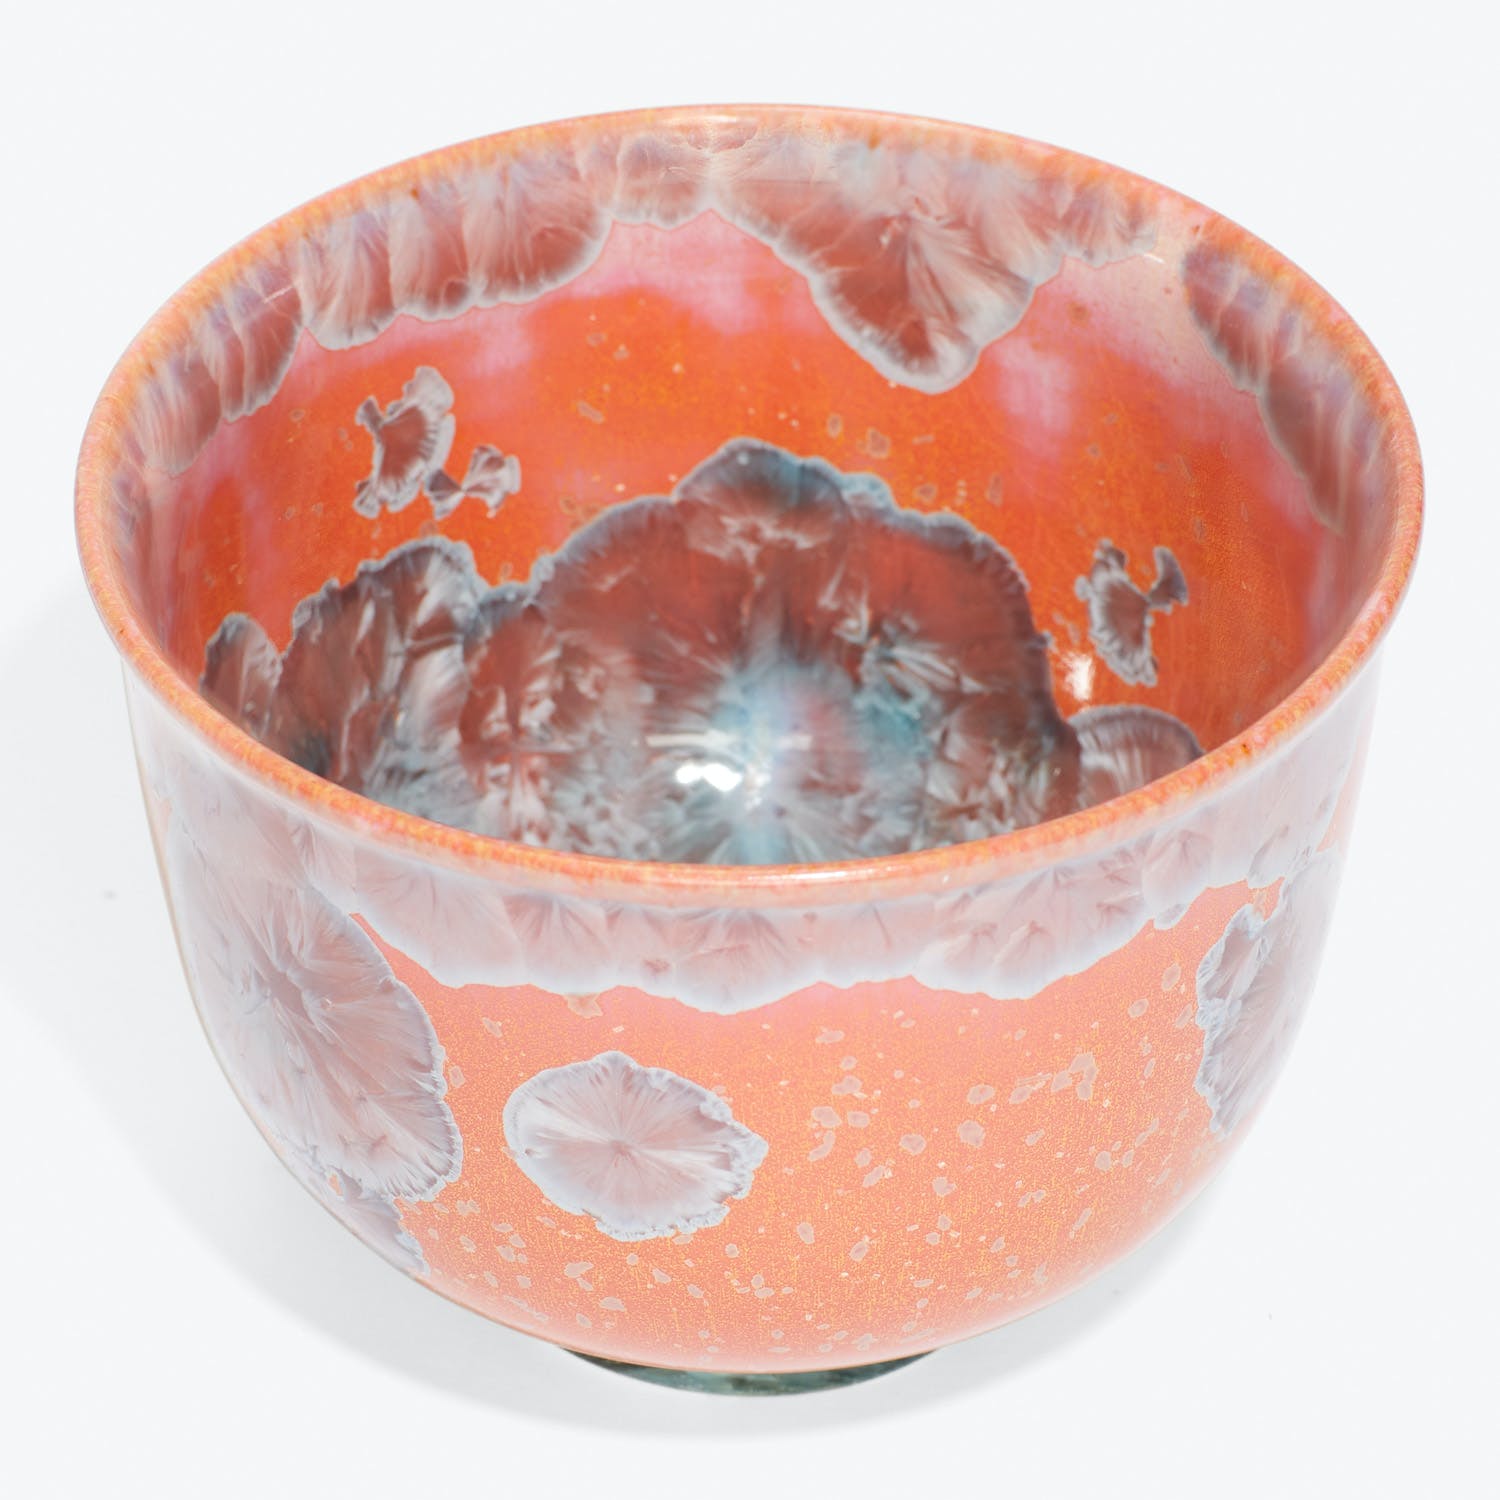 Exquisite ceramic bowl showcases intricate glaze patterns and impeccable craftsmanship.